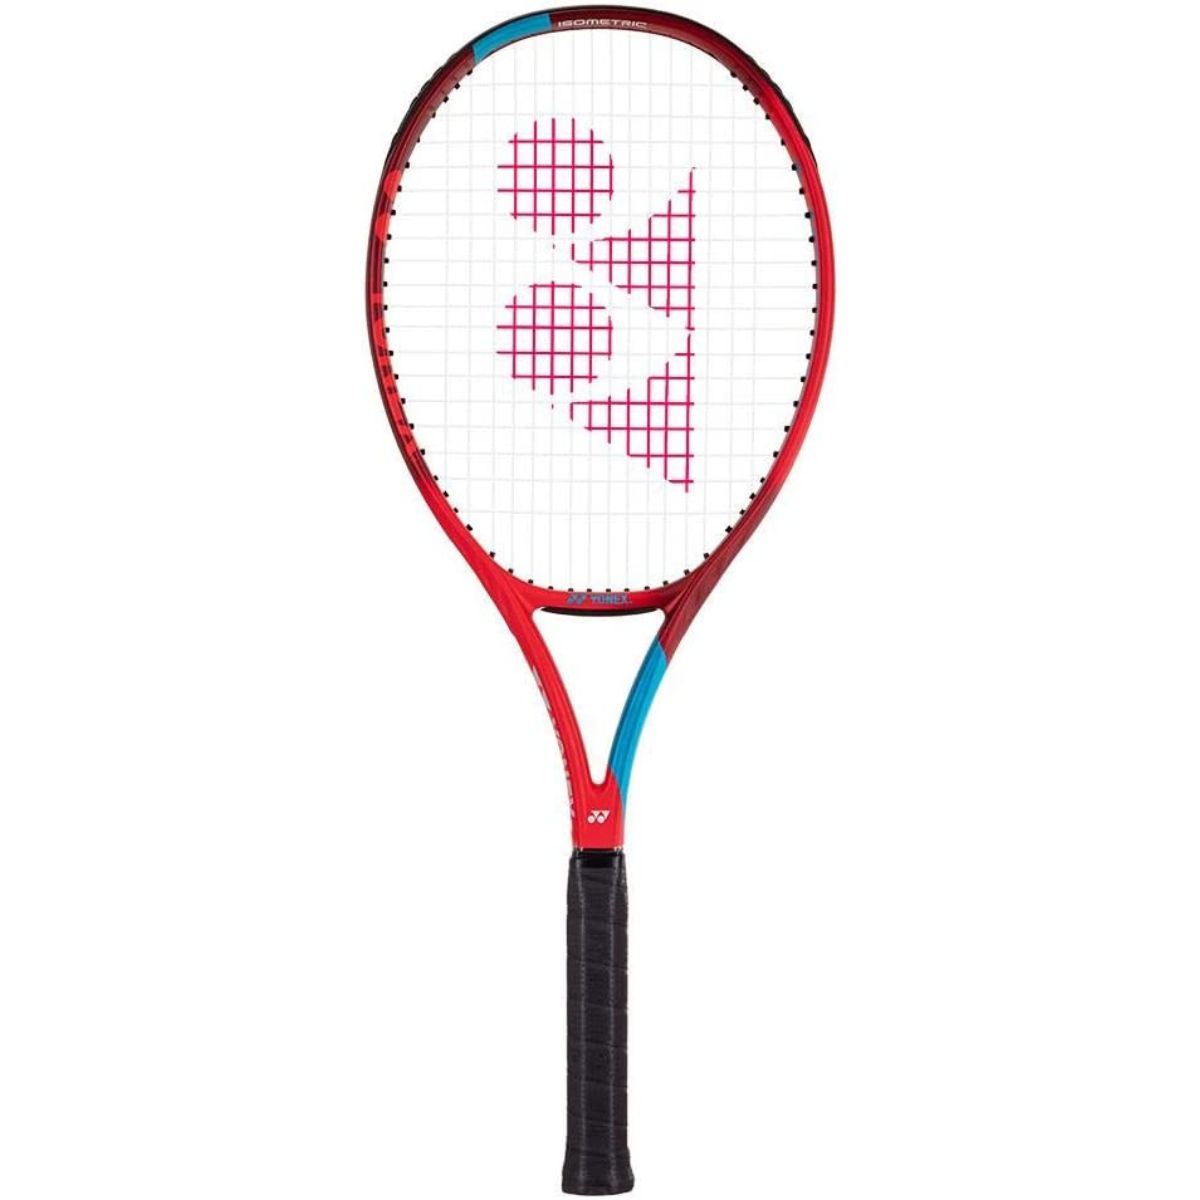 The Best Yonex Tennis Rackets Options: Yonex VCORE Feel